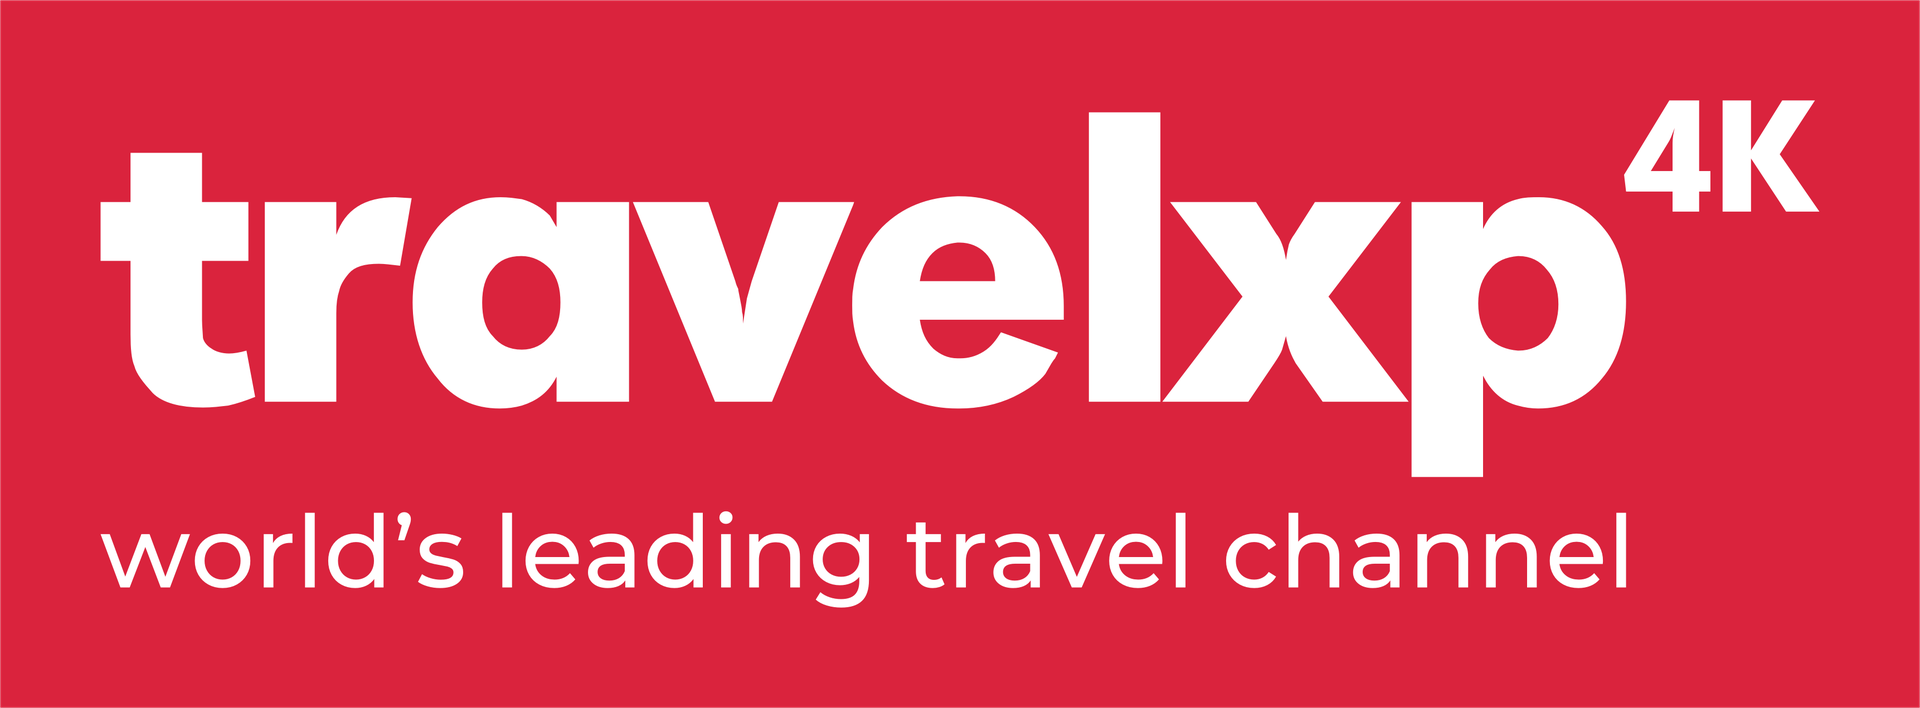 Travelxp_4K_logo_with_tagline_redbg.png